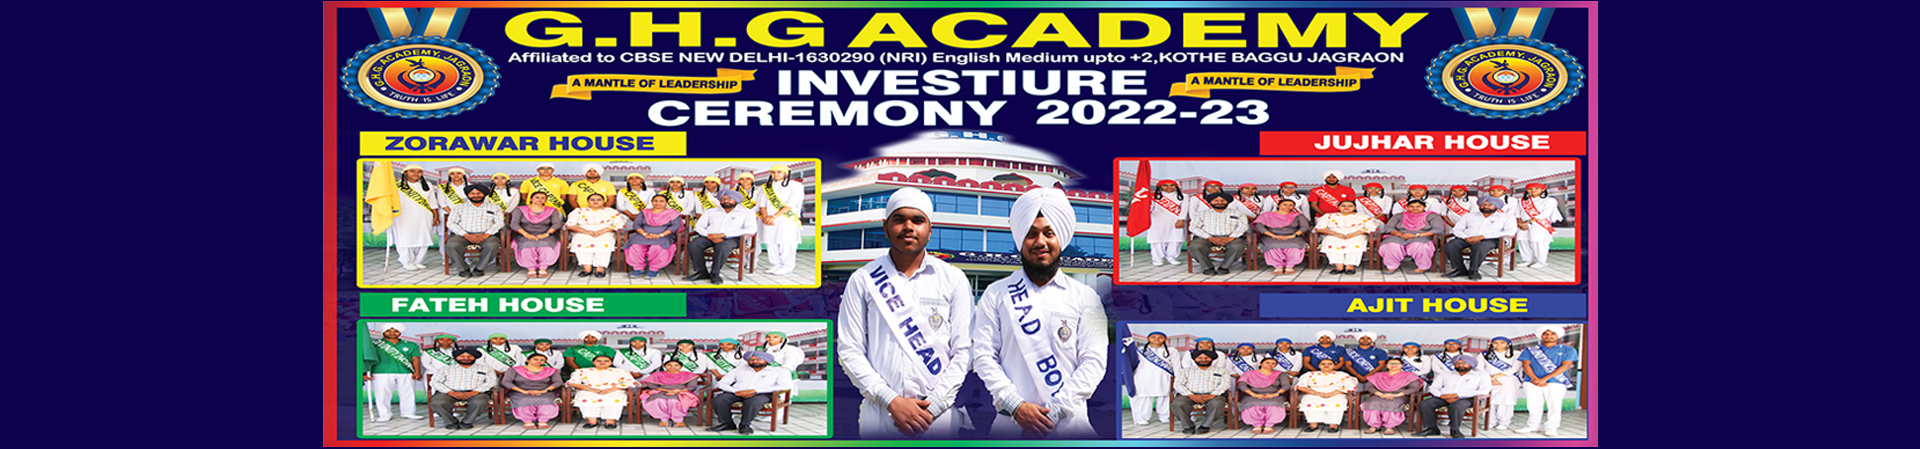 GHG Academy Jagraon